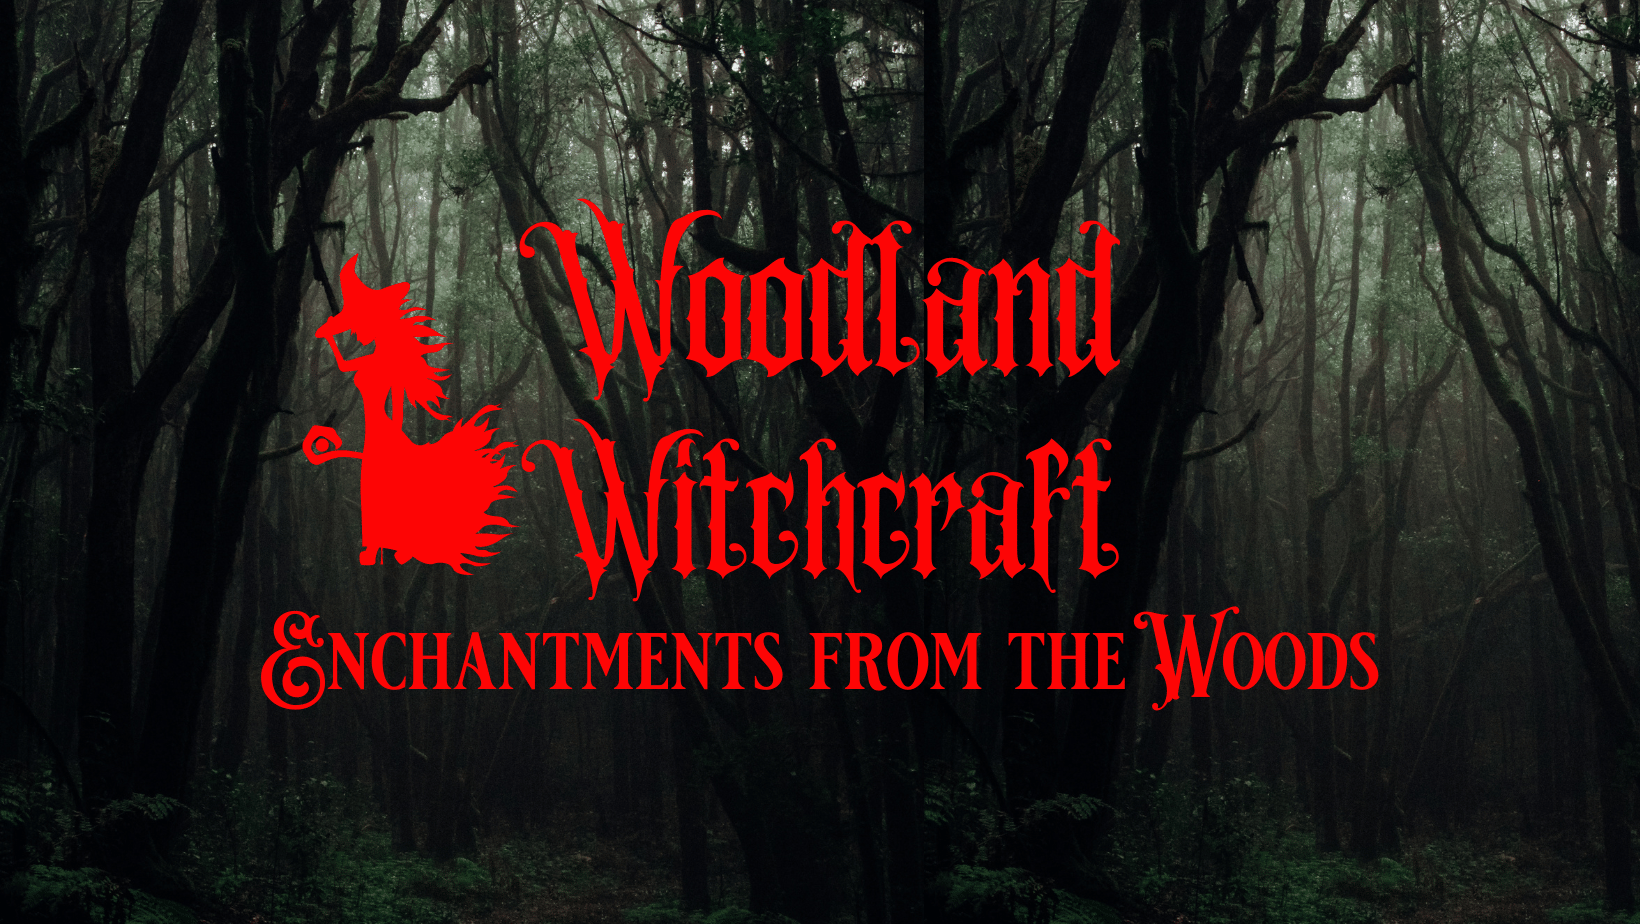 Woodland Witchcraft Logo on a dark wooded background